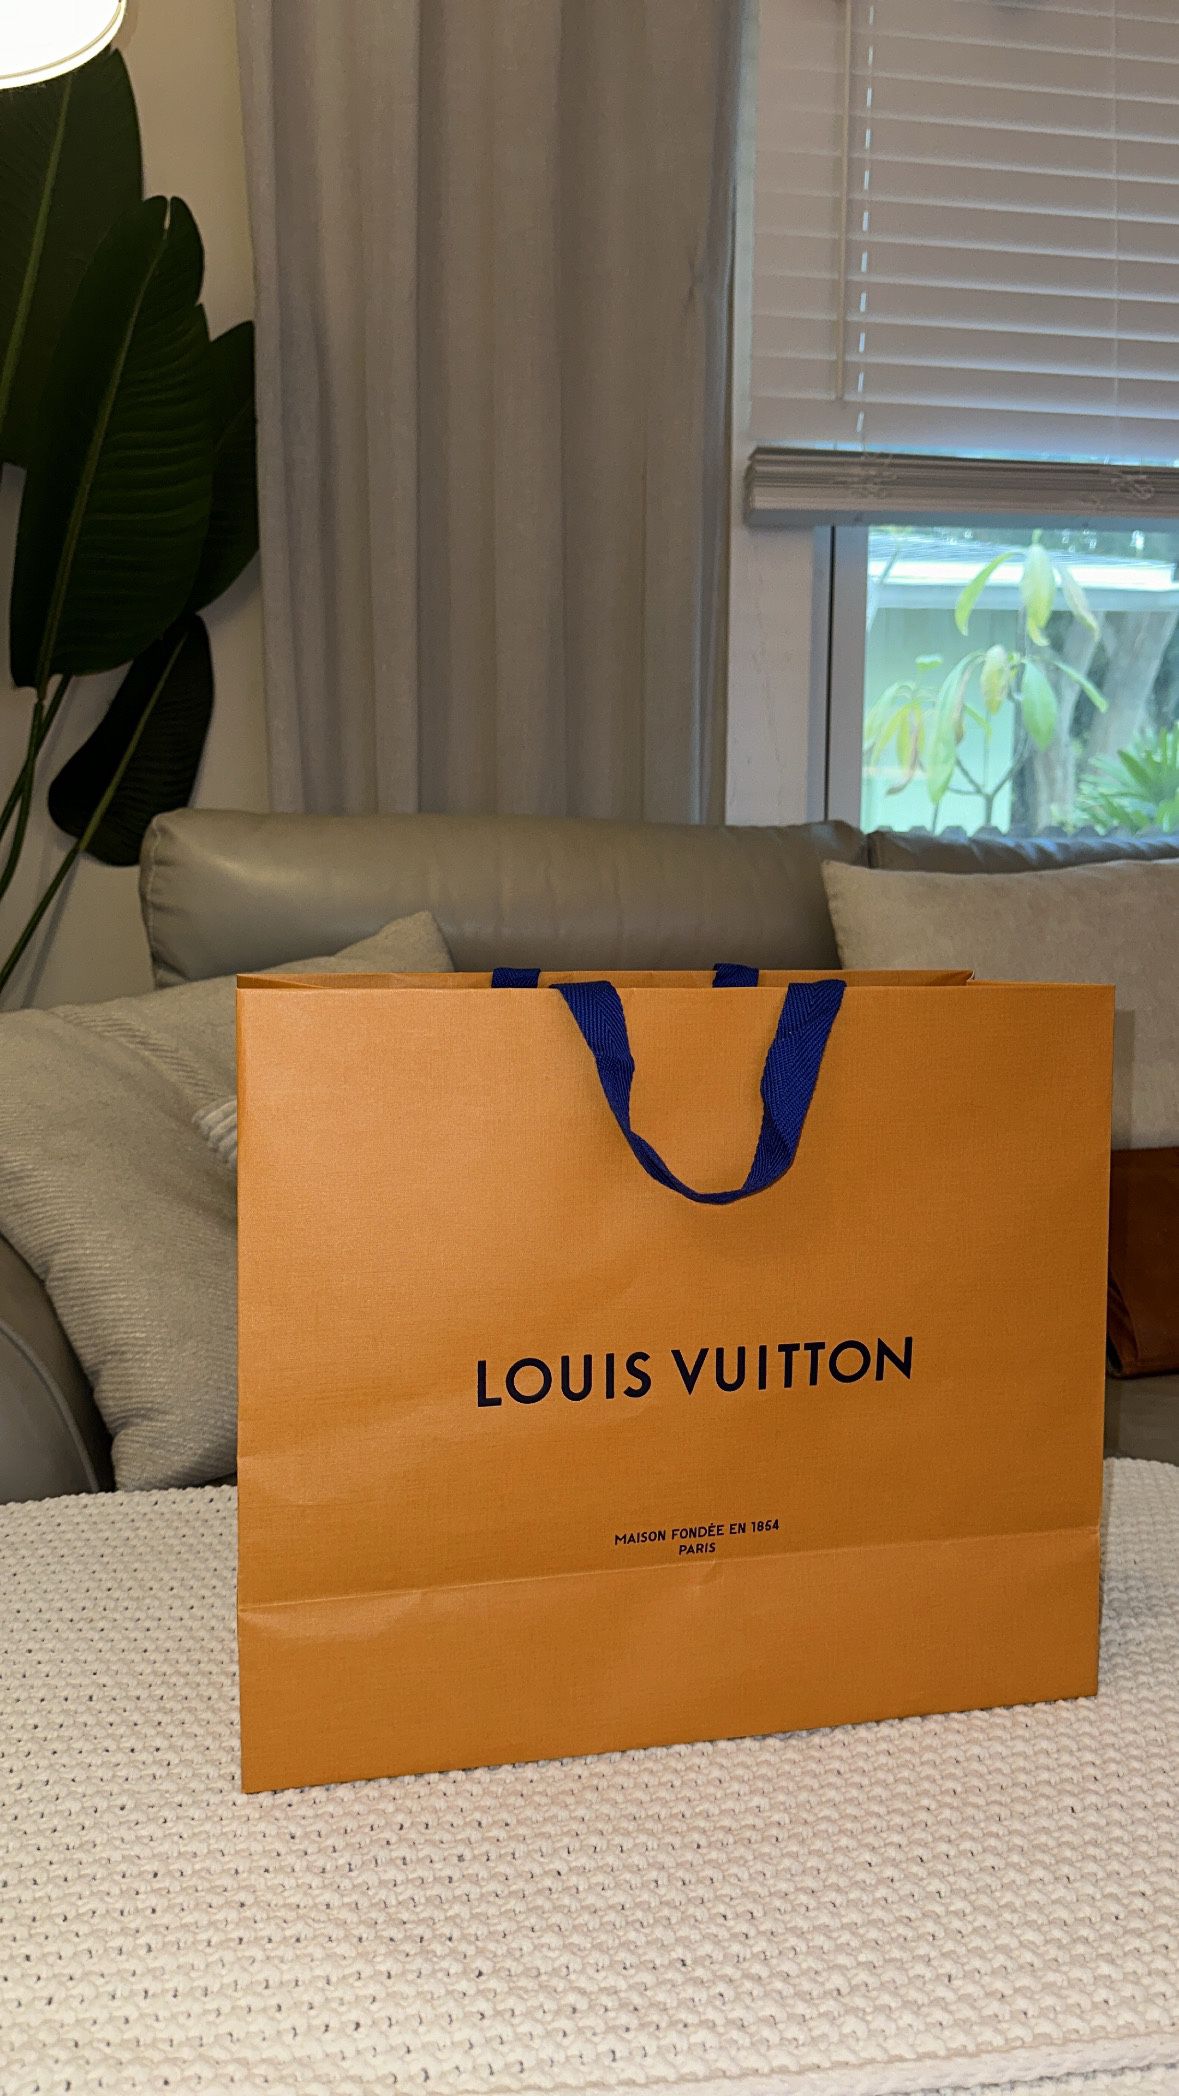 LOUIS VUITTON Gift Bag